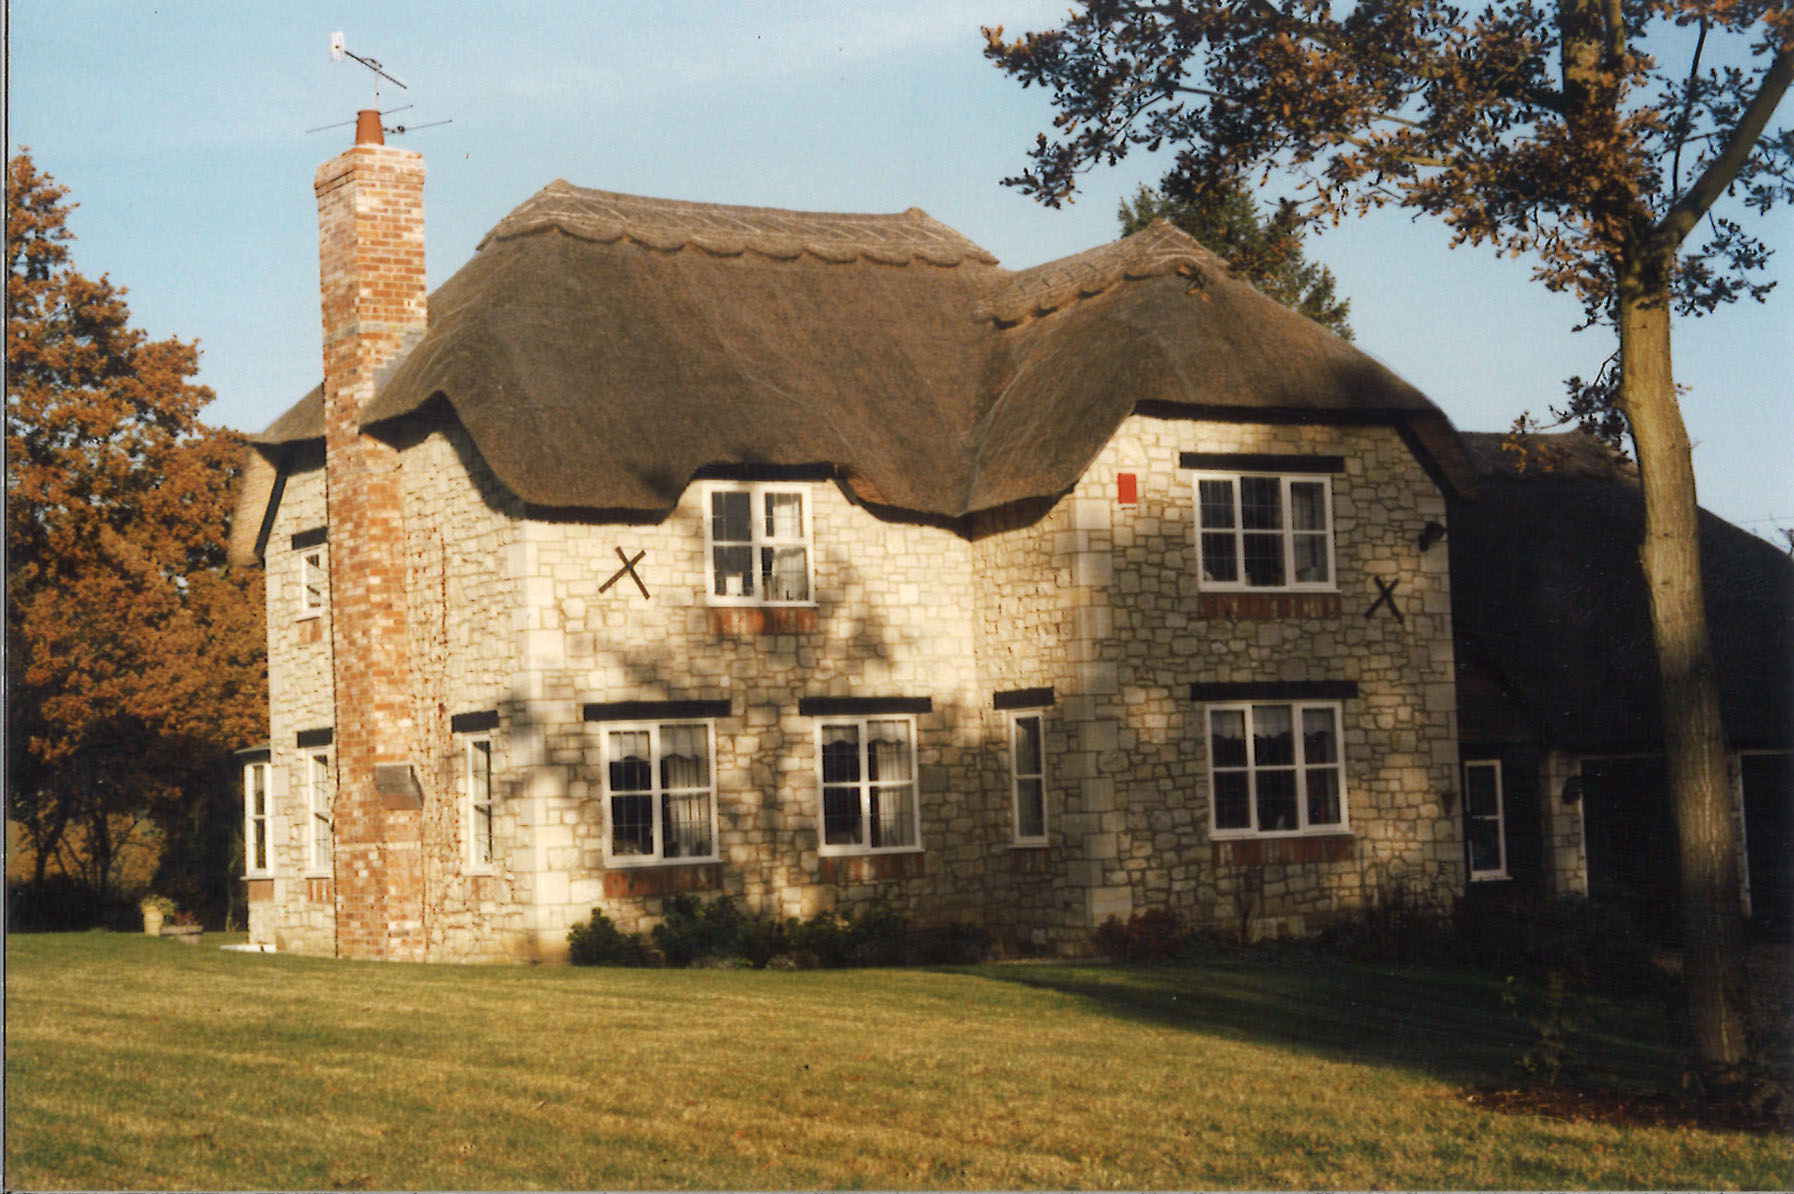 Thatched cottage built by Emlor Homes